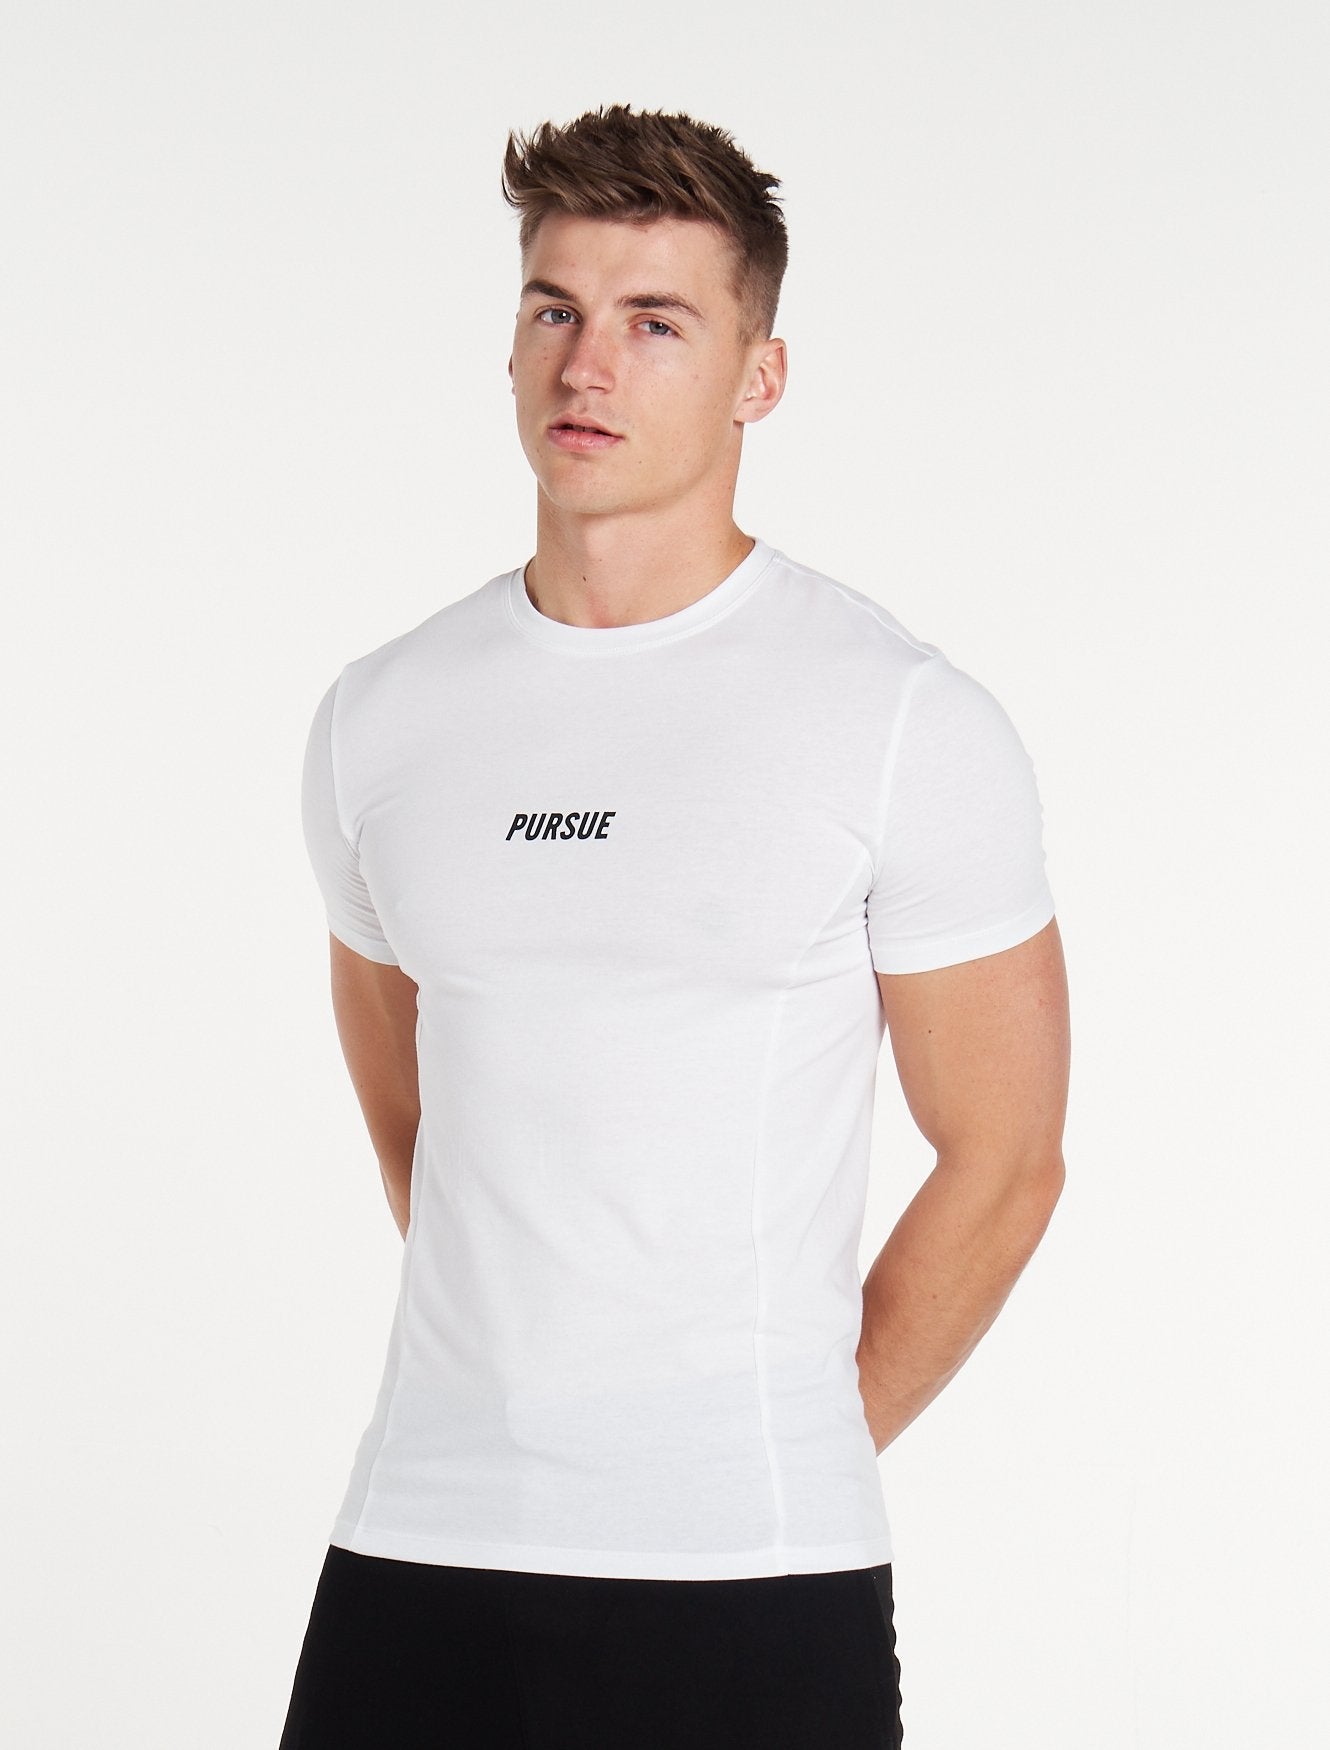 Essential T-Shirt / White Pursue Fitness 5